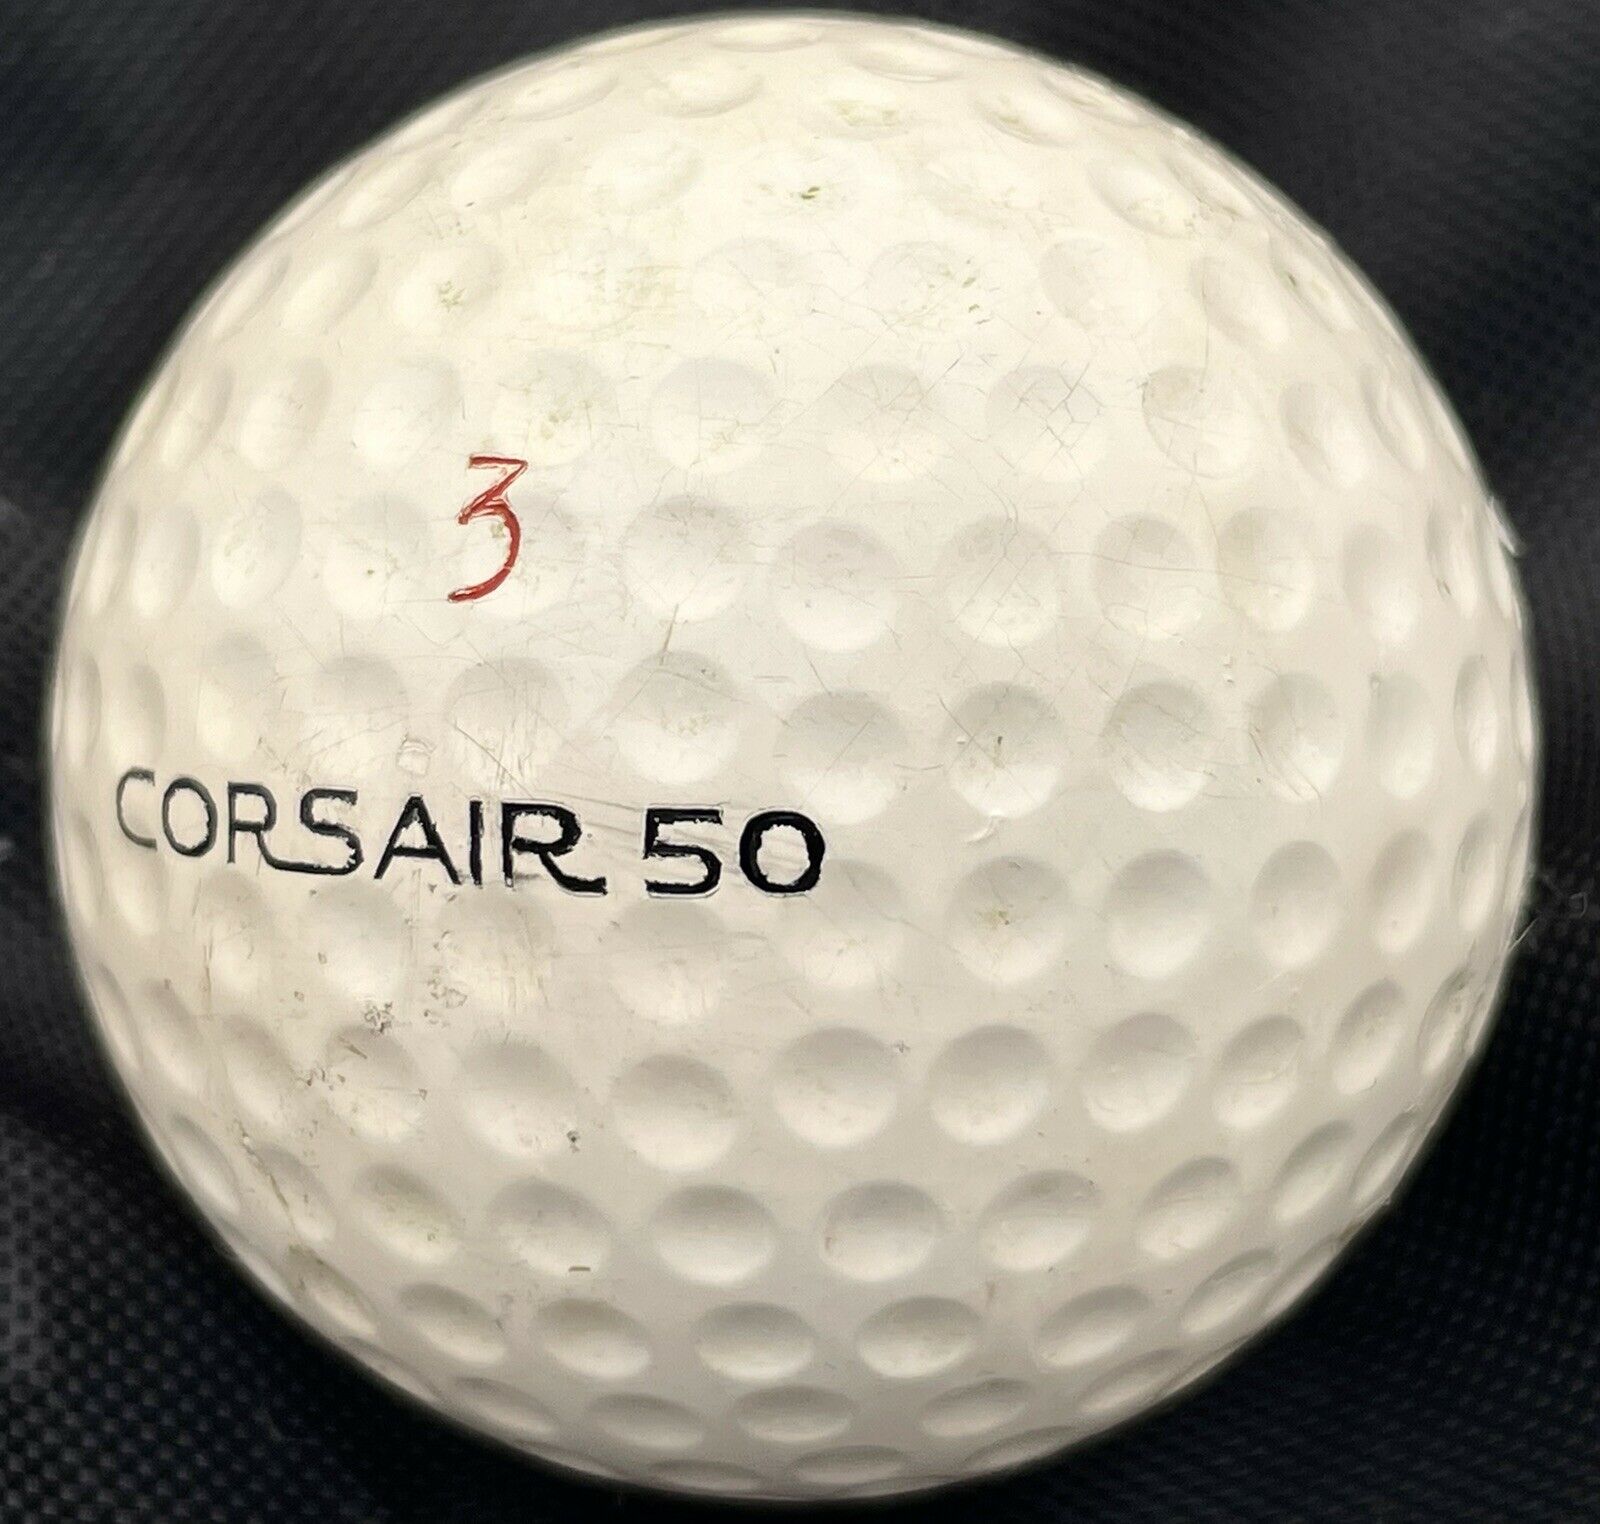 Corsair 50 Japan Golf Ball Vintage Display Old Very Rare Collectible